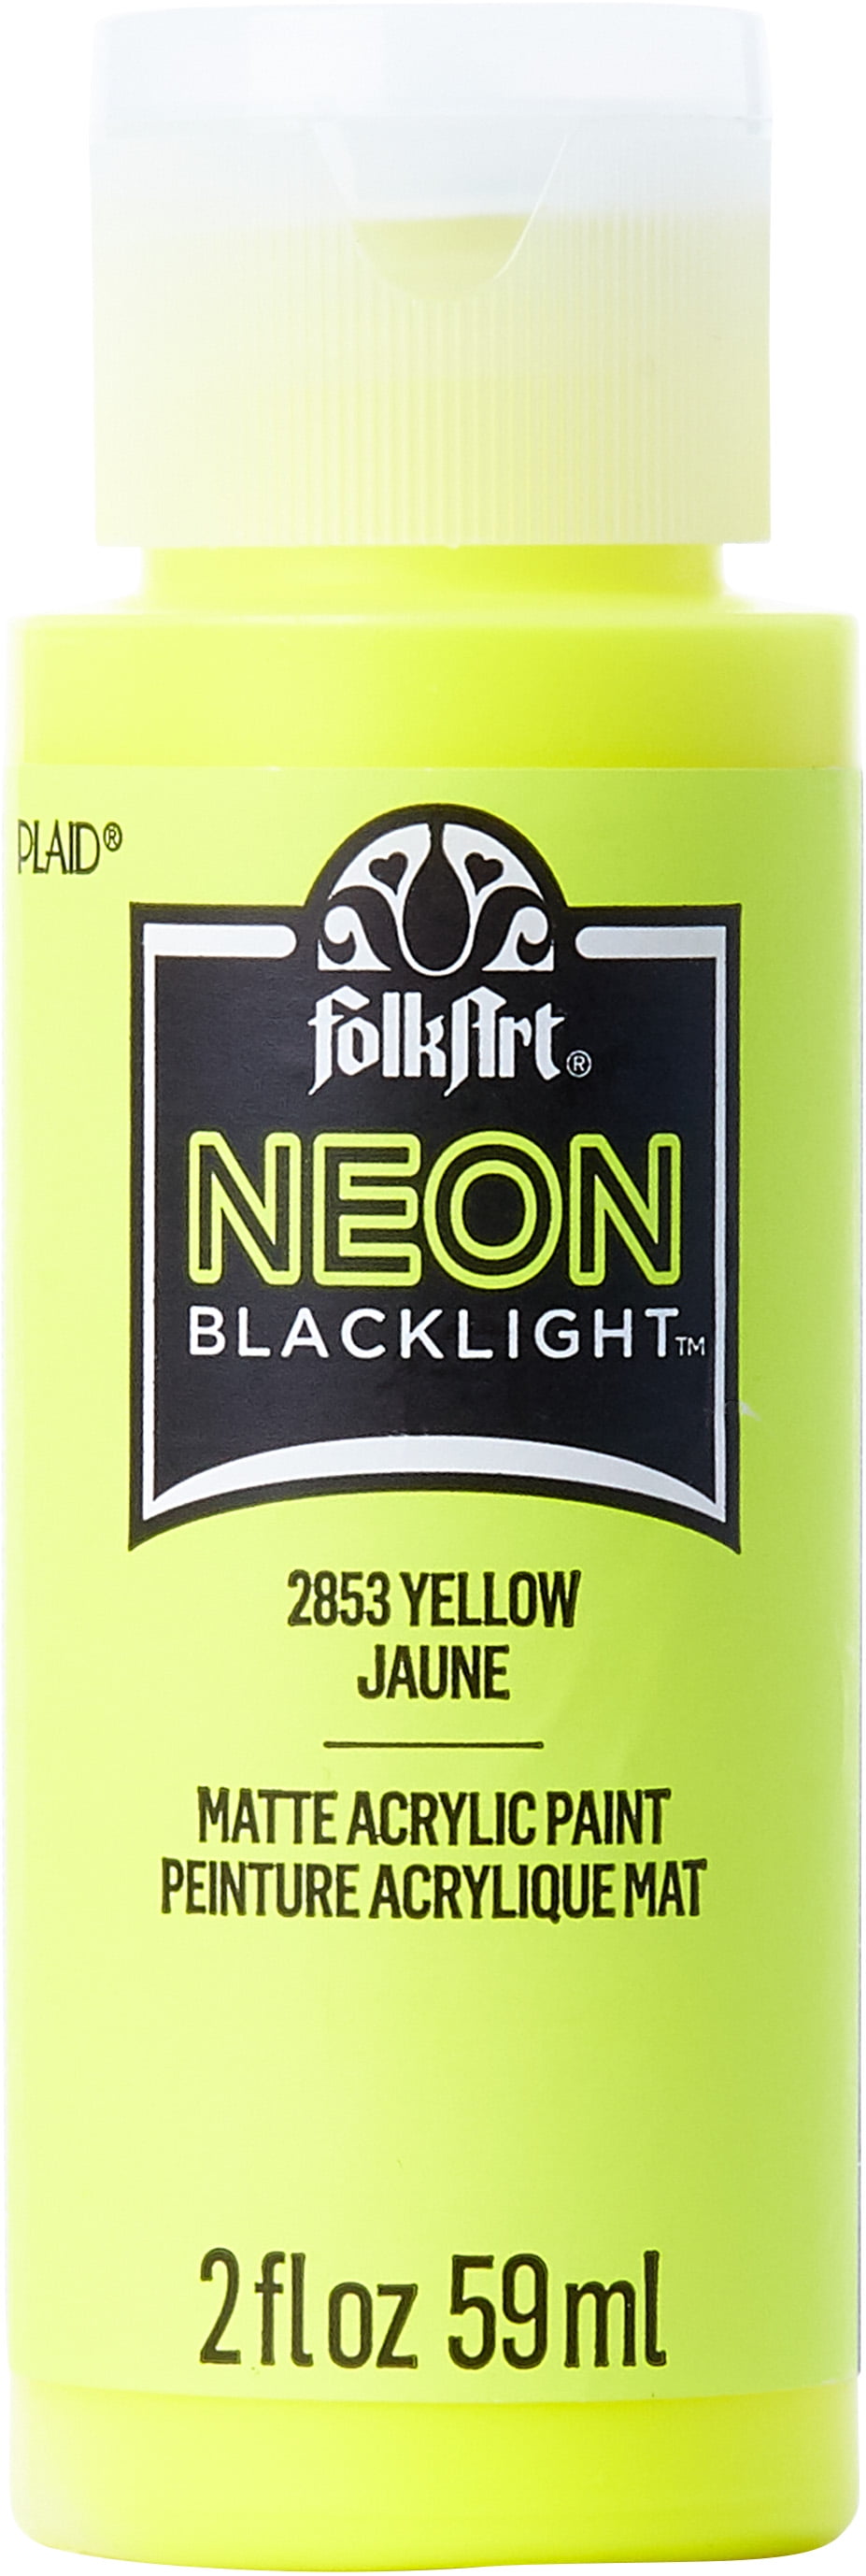 Art Product Review - FolkArt Multi-Surface Blacklight Neon Paint